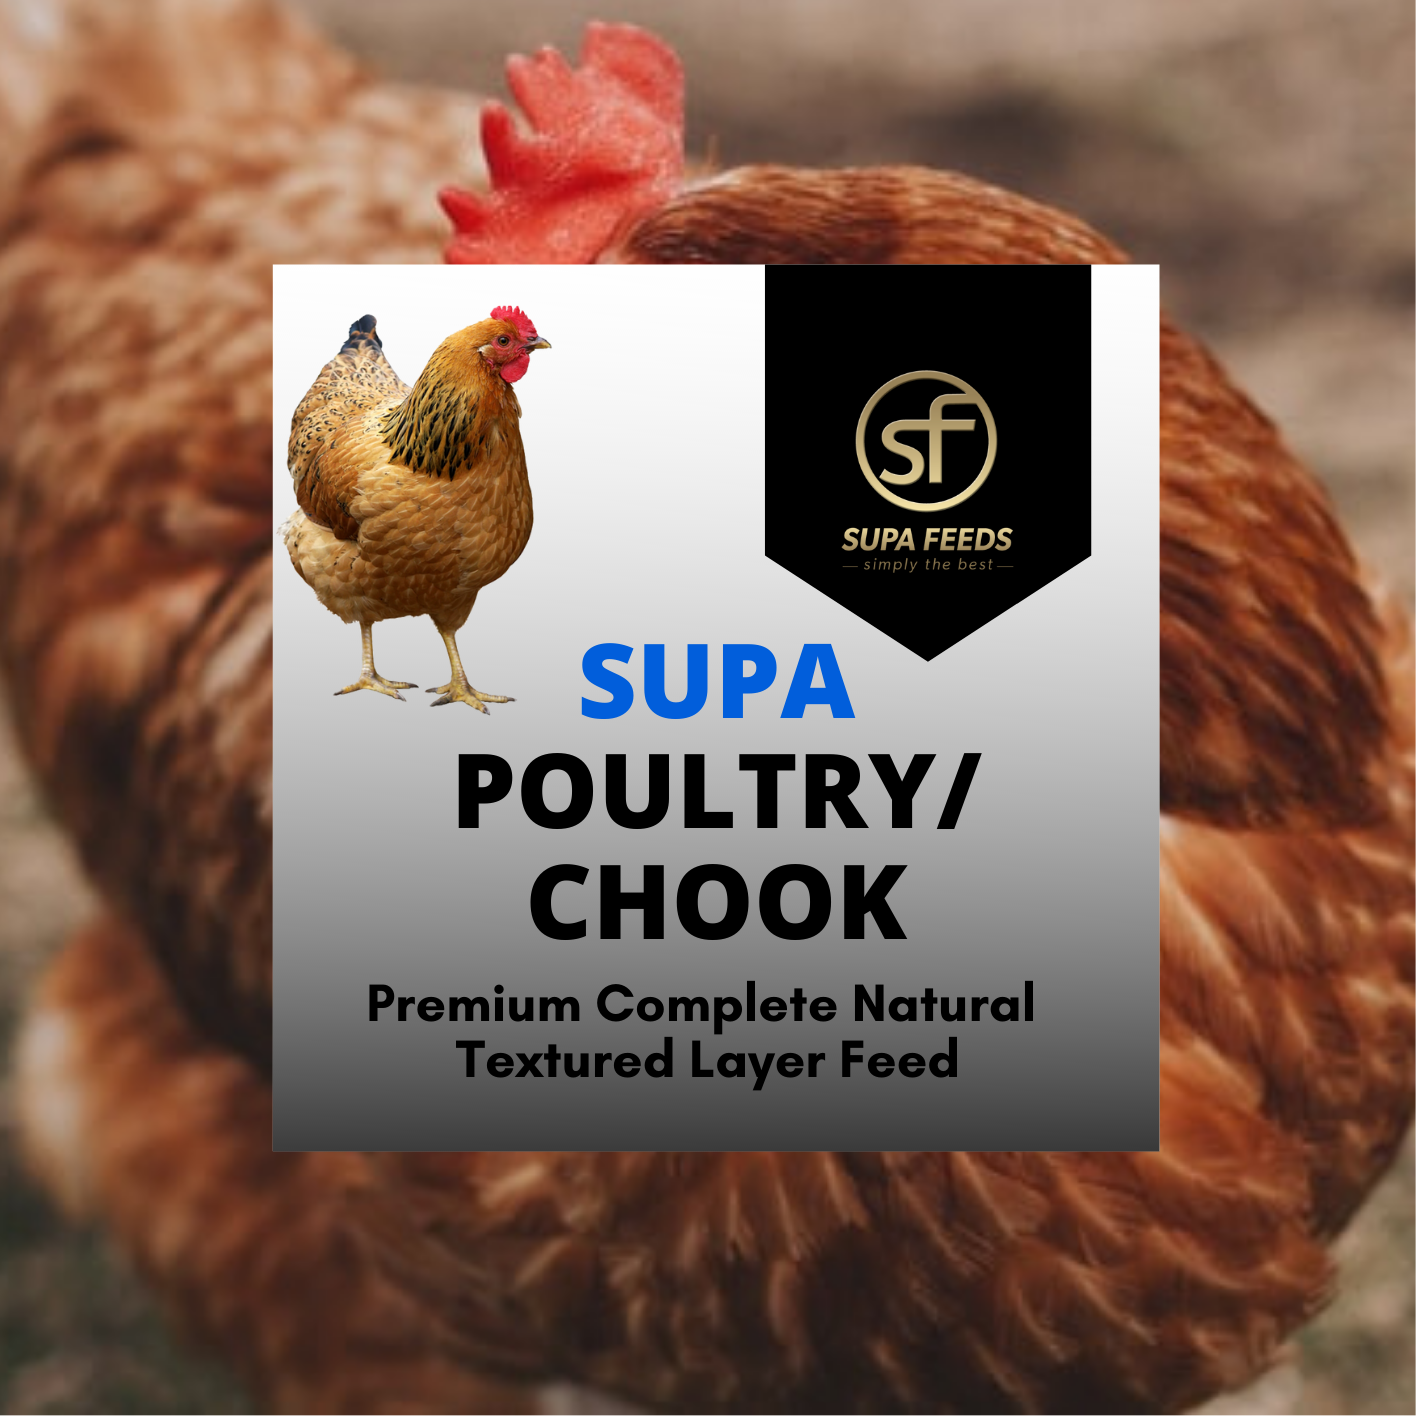 Supa Poultry/Chook Sample